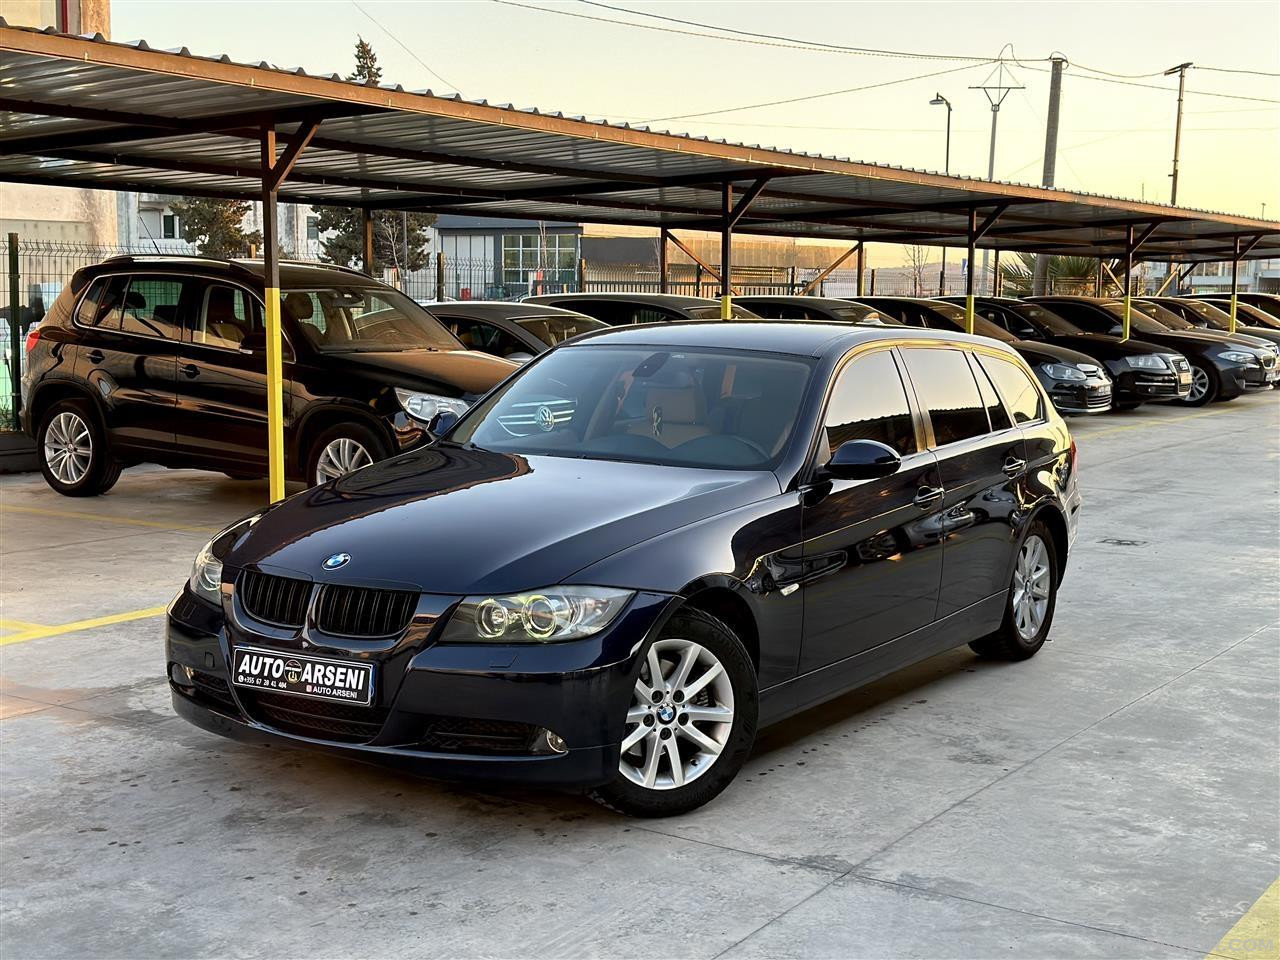 OKAZION!!!BMW SERIA 3 320D “AUTOMAT TIP TRONIC “